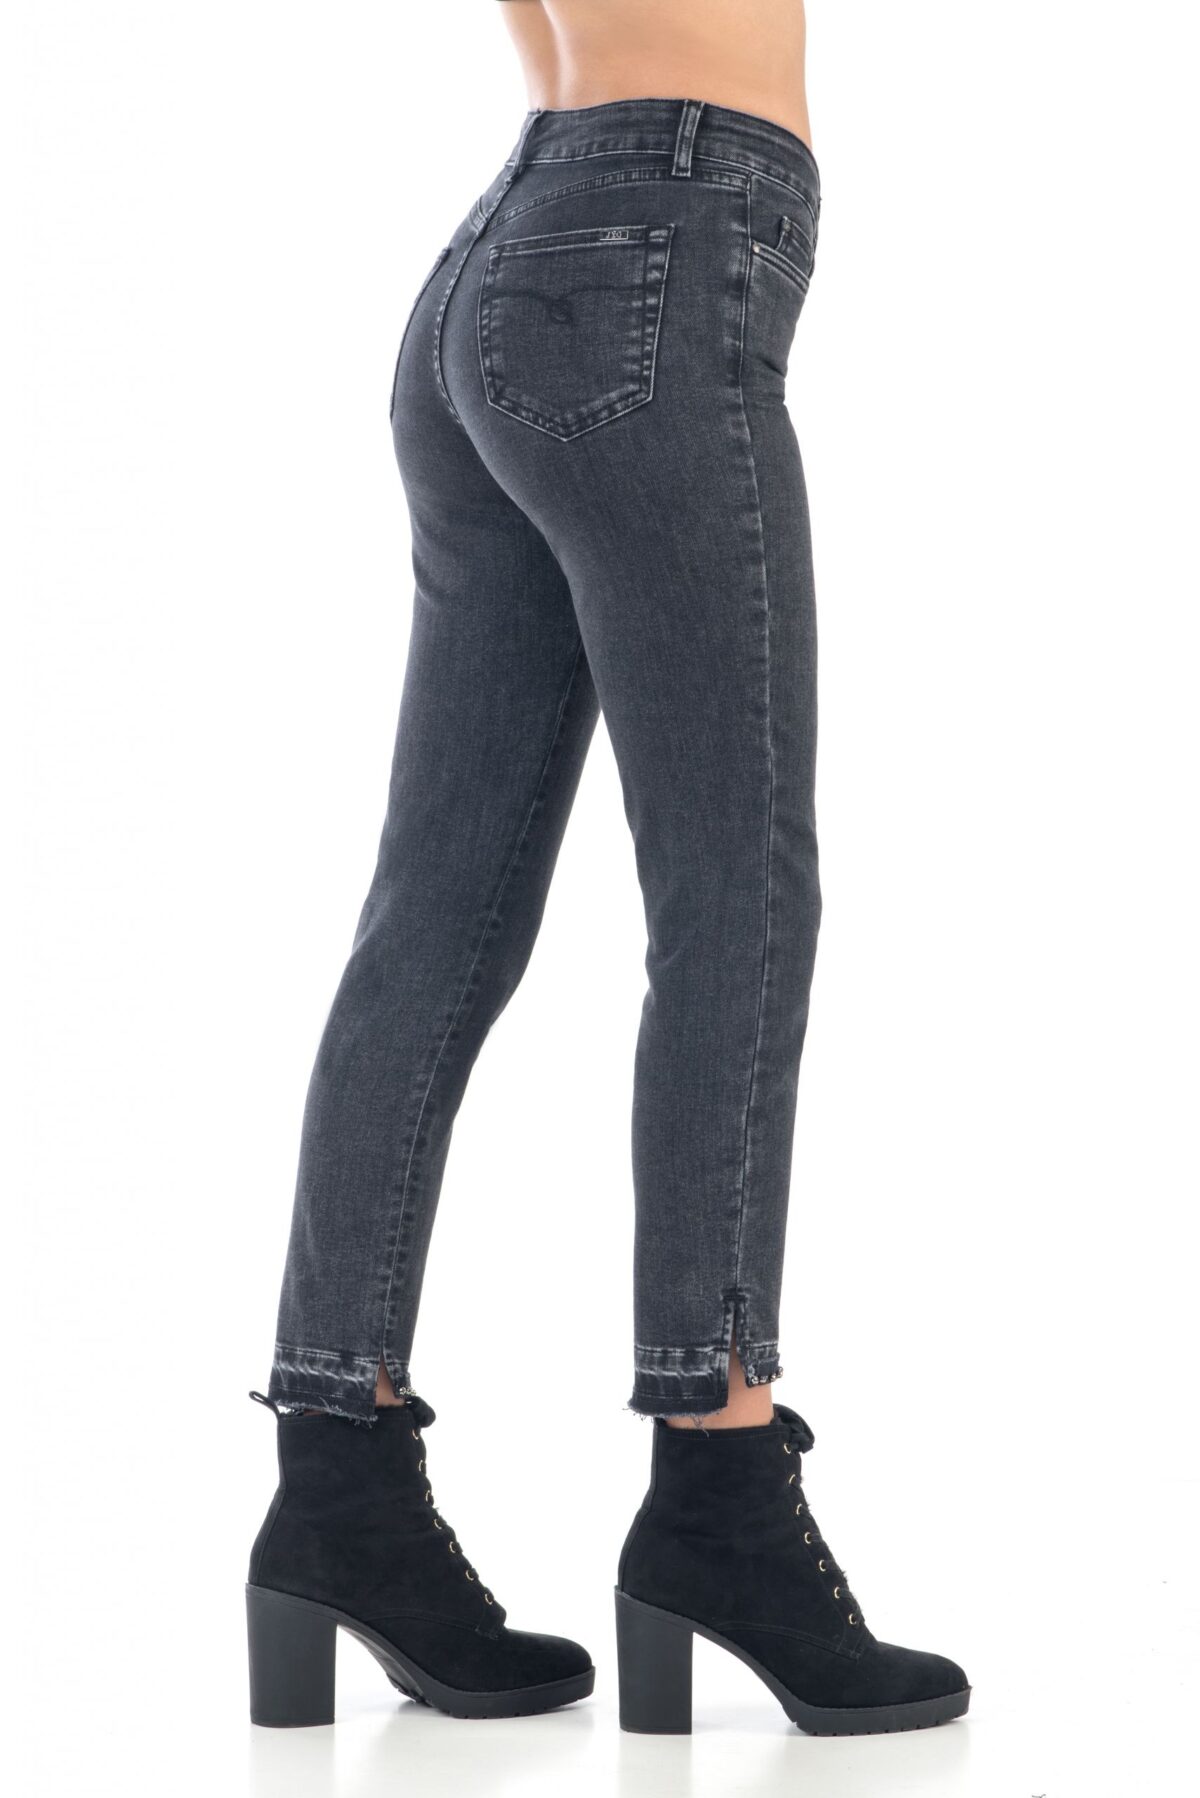 Jonny Q jeans P1490 Meryl x fit stretch Q4912 10011 2 scaled